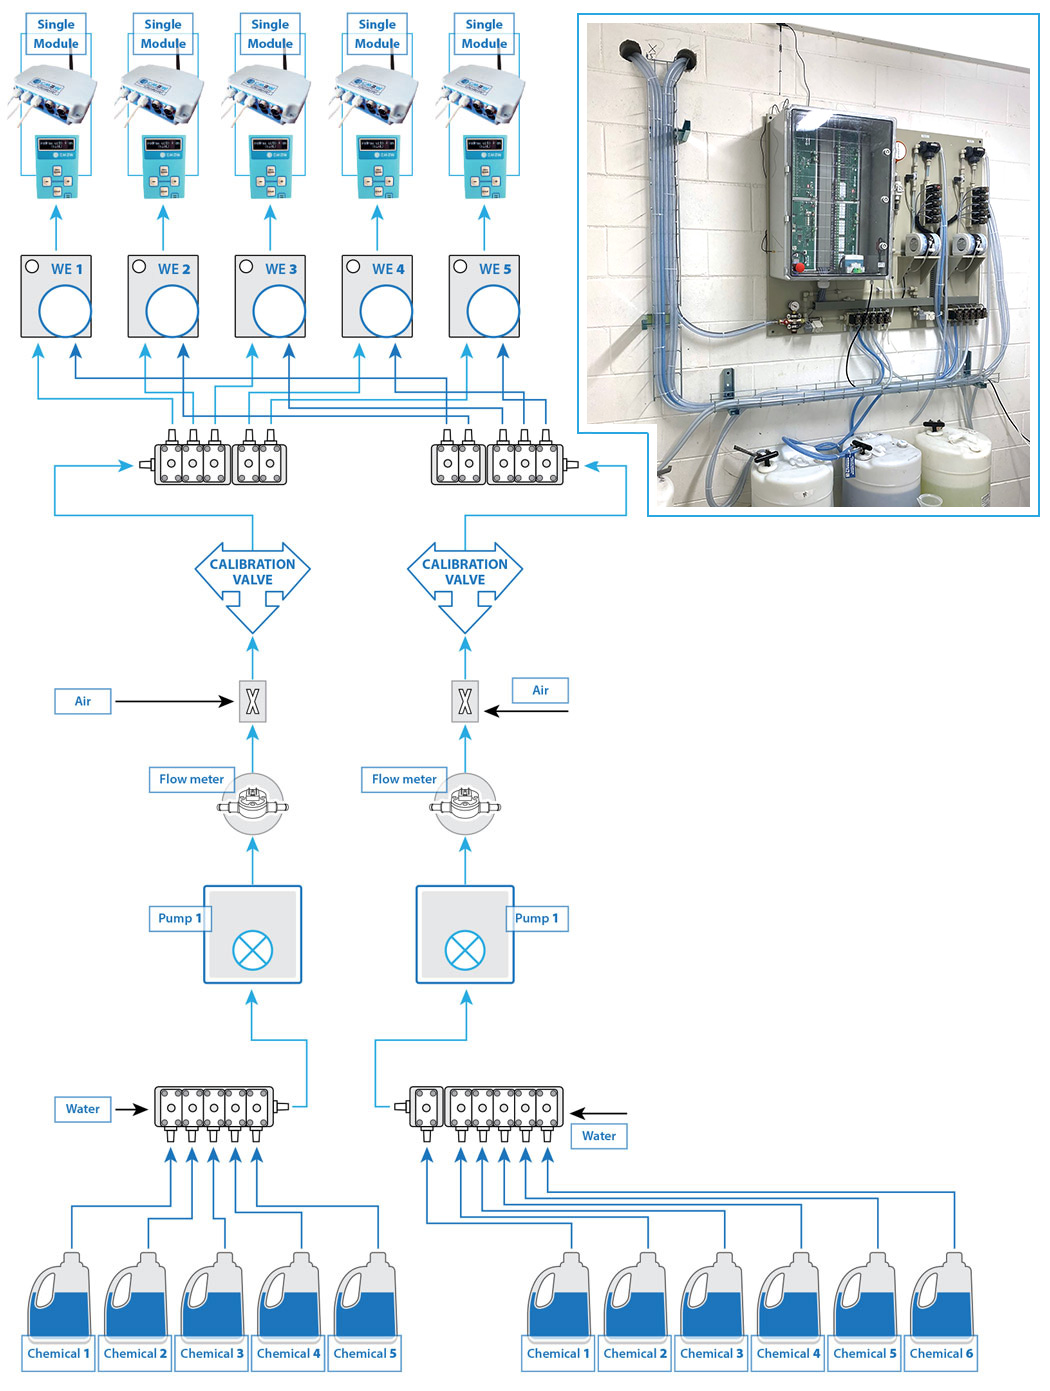 CTDS - 2 channels, 5 wash extractors, 11 chemicals